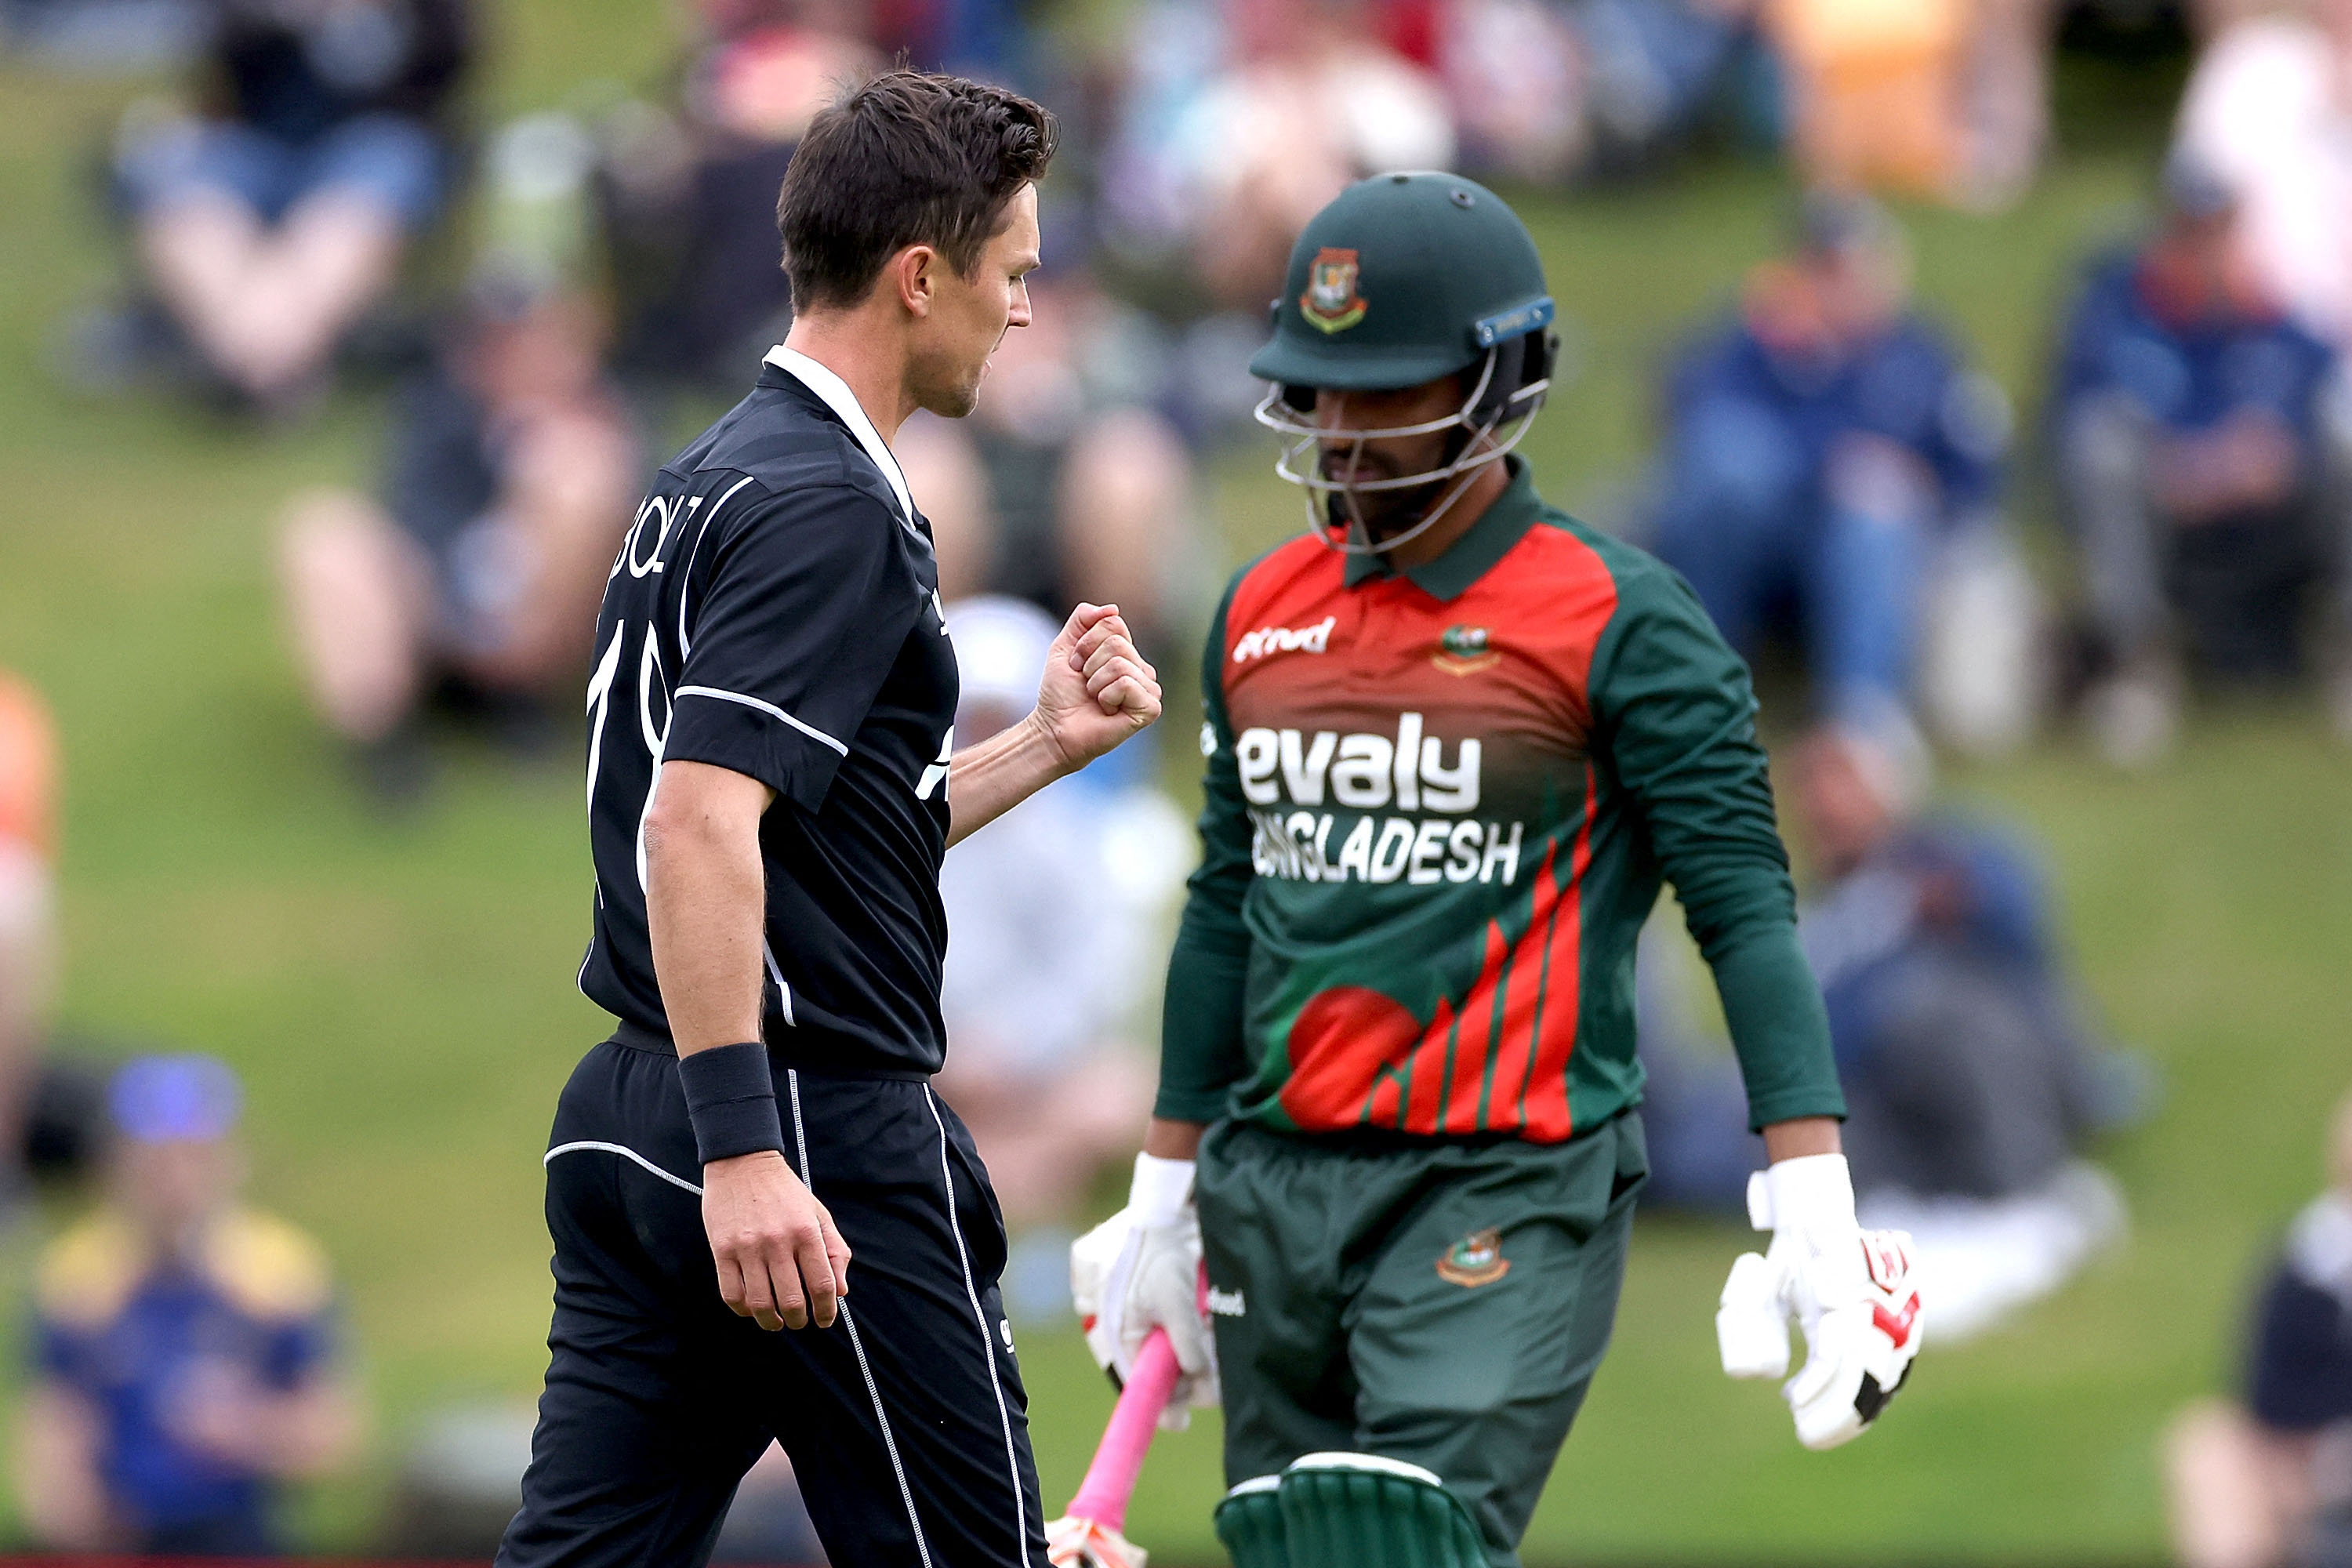 NZ vs BAN | Too many soft dismissals cost Bangladesh, laments Tamim Iqbal